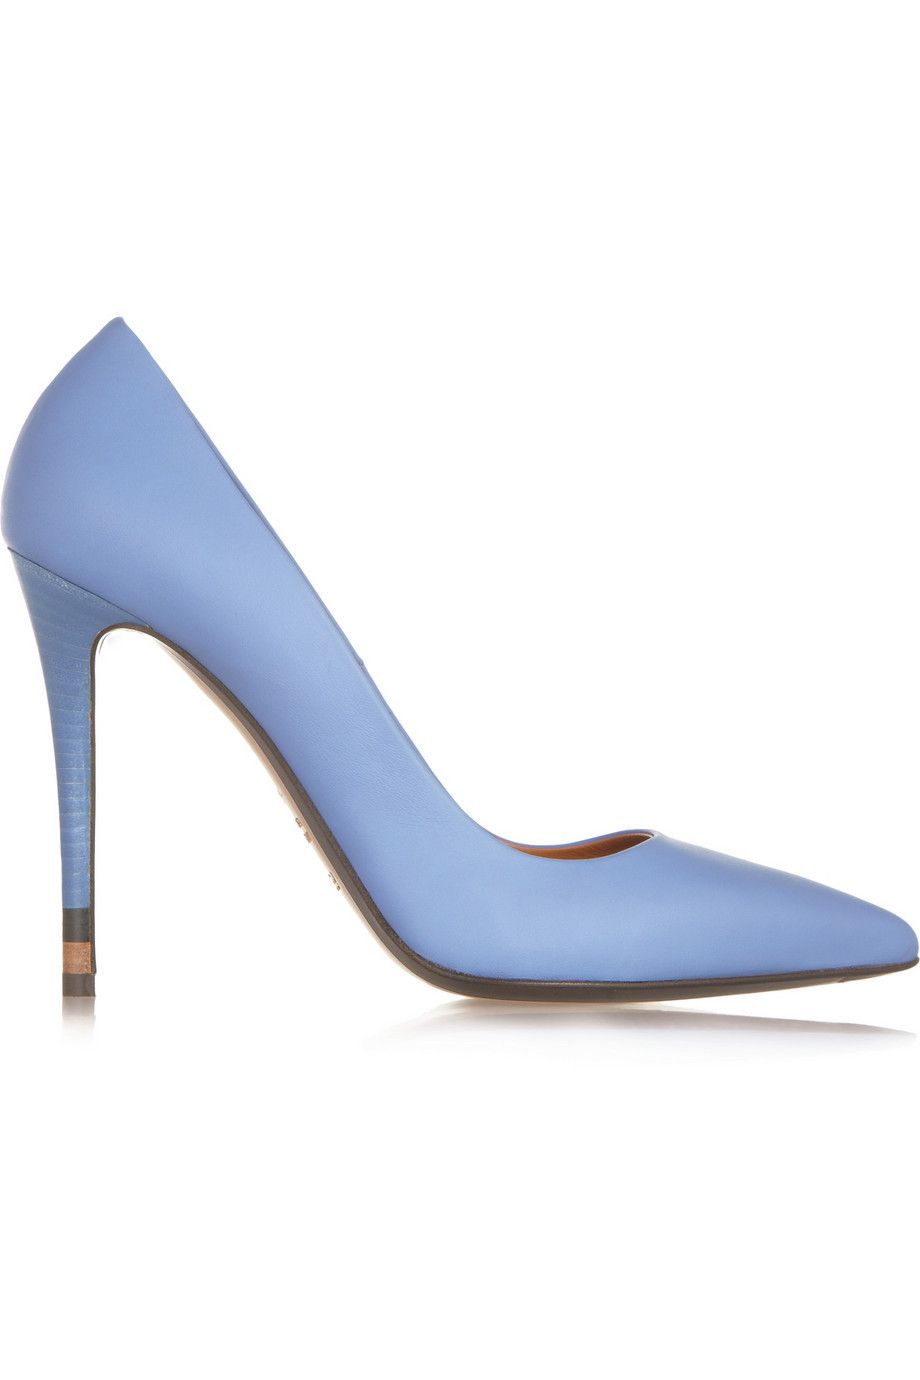 High heels, Azure, Electric blue, Tan, Basic pump, Beige, Aqua, Foot, Court shoe, Dress shoe, 